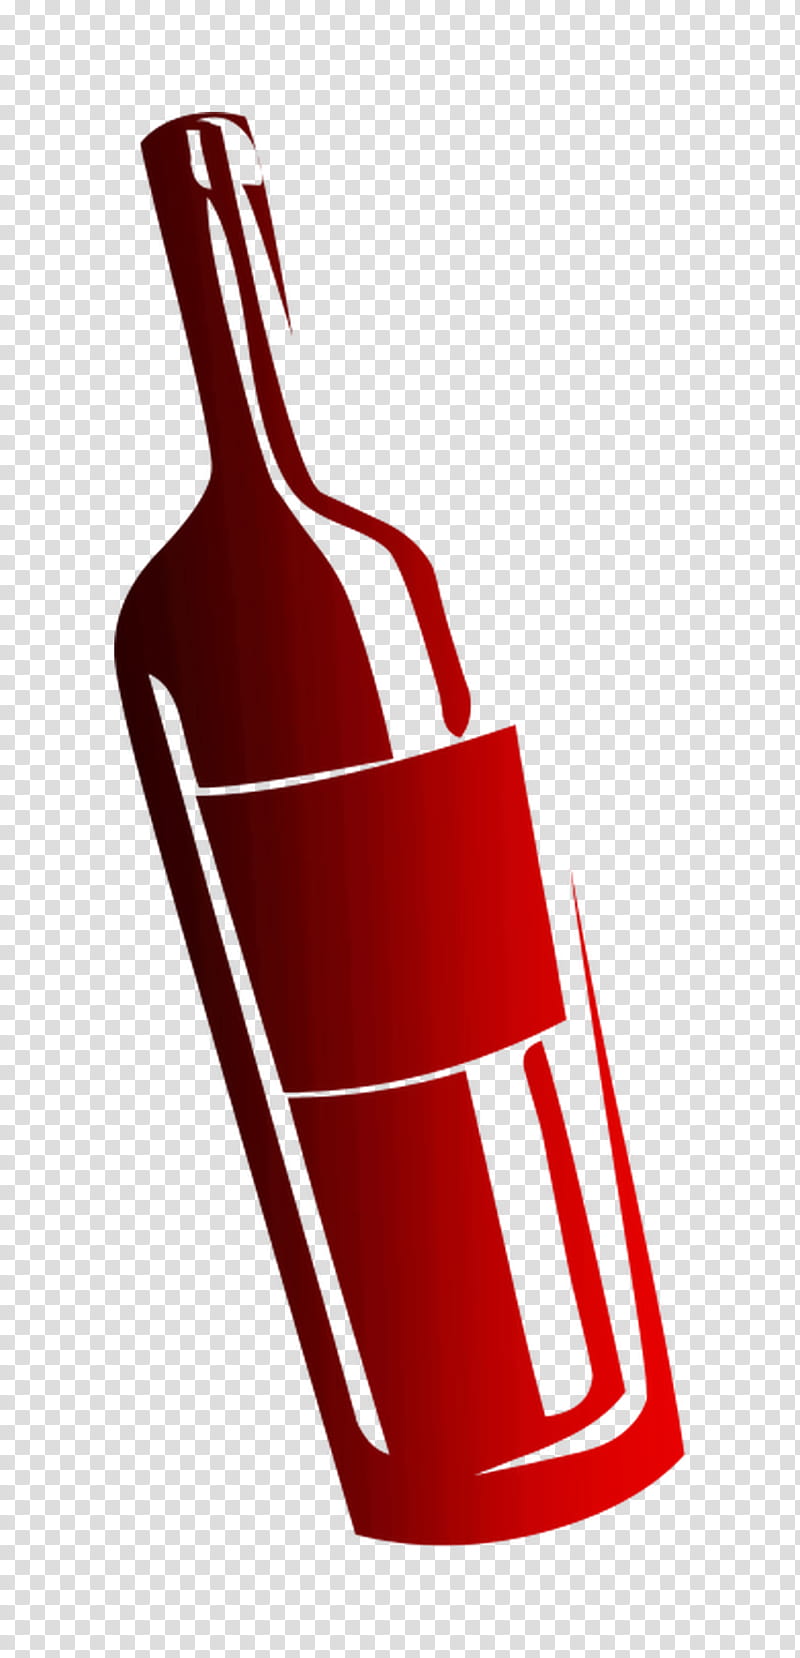 Water, Bottle, Logo, Line, Wine Bottle, Drinkware, Barware, Tableware transparent background PNG clipart